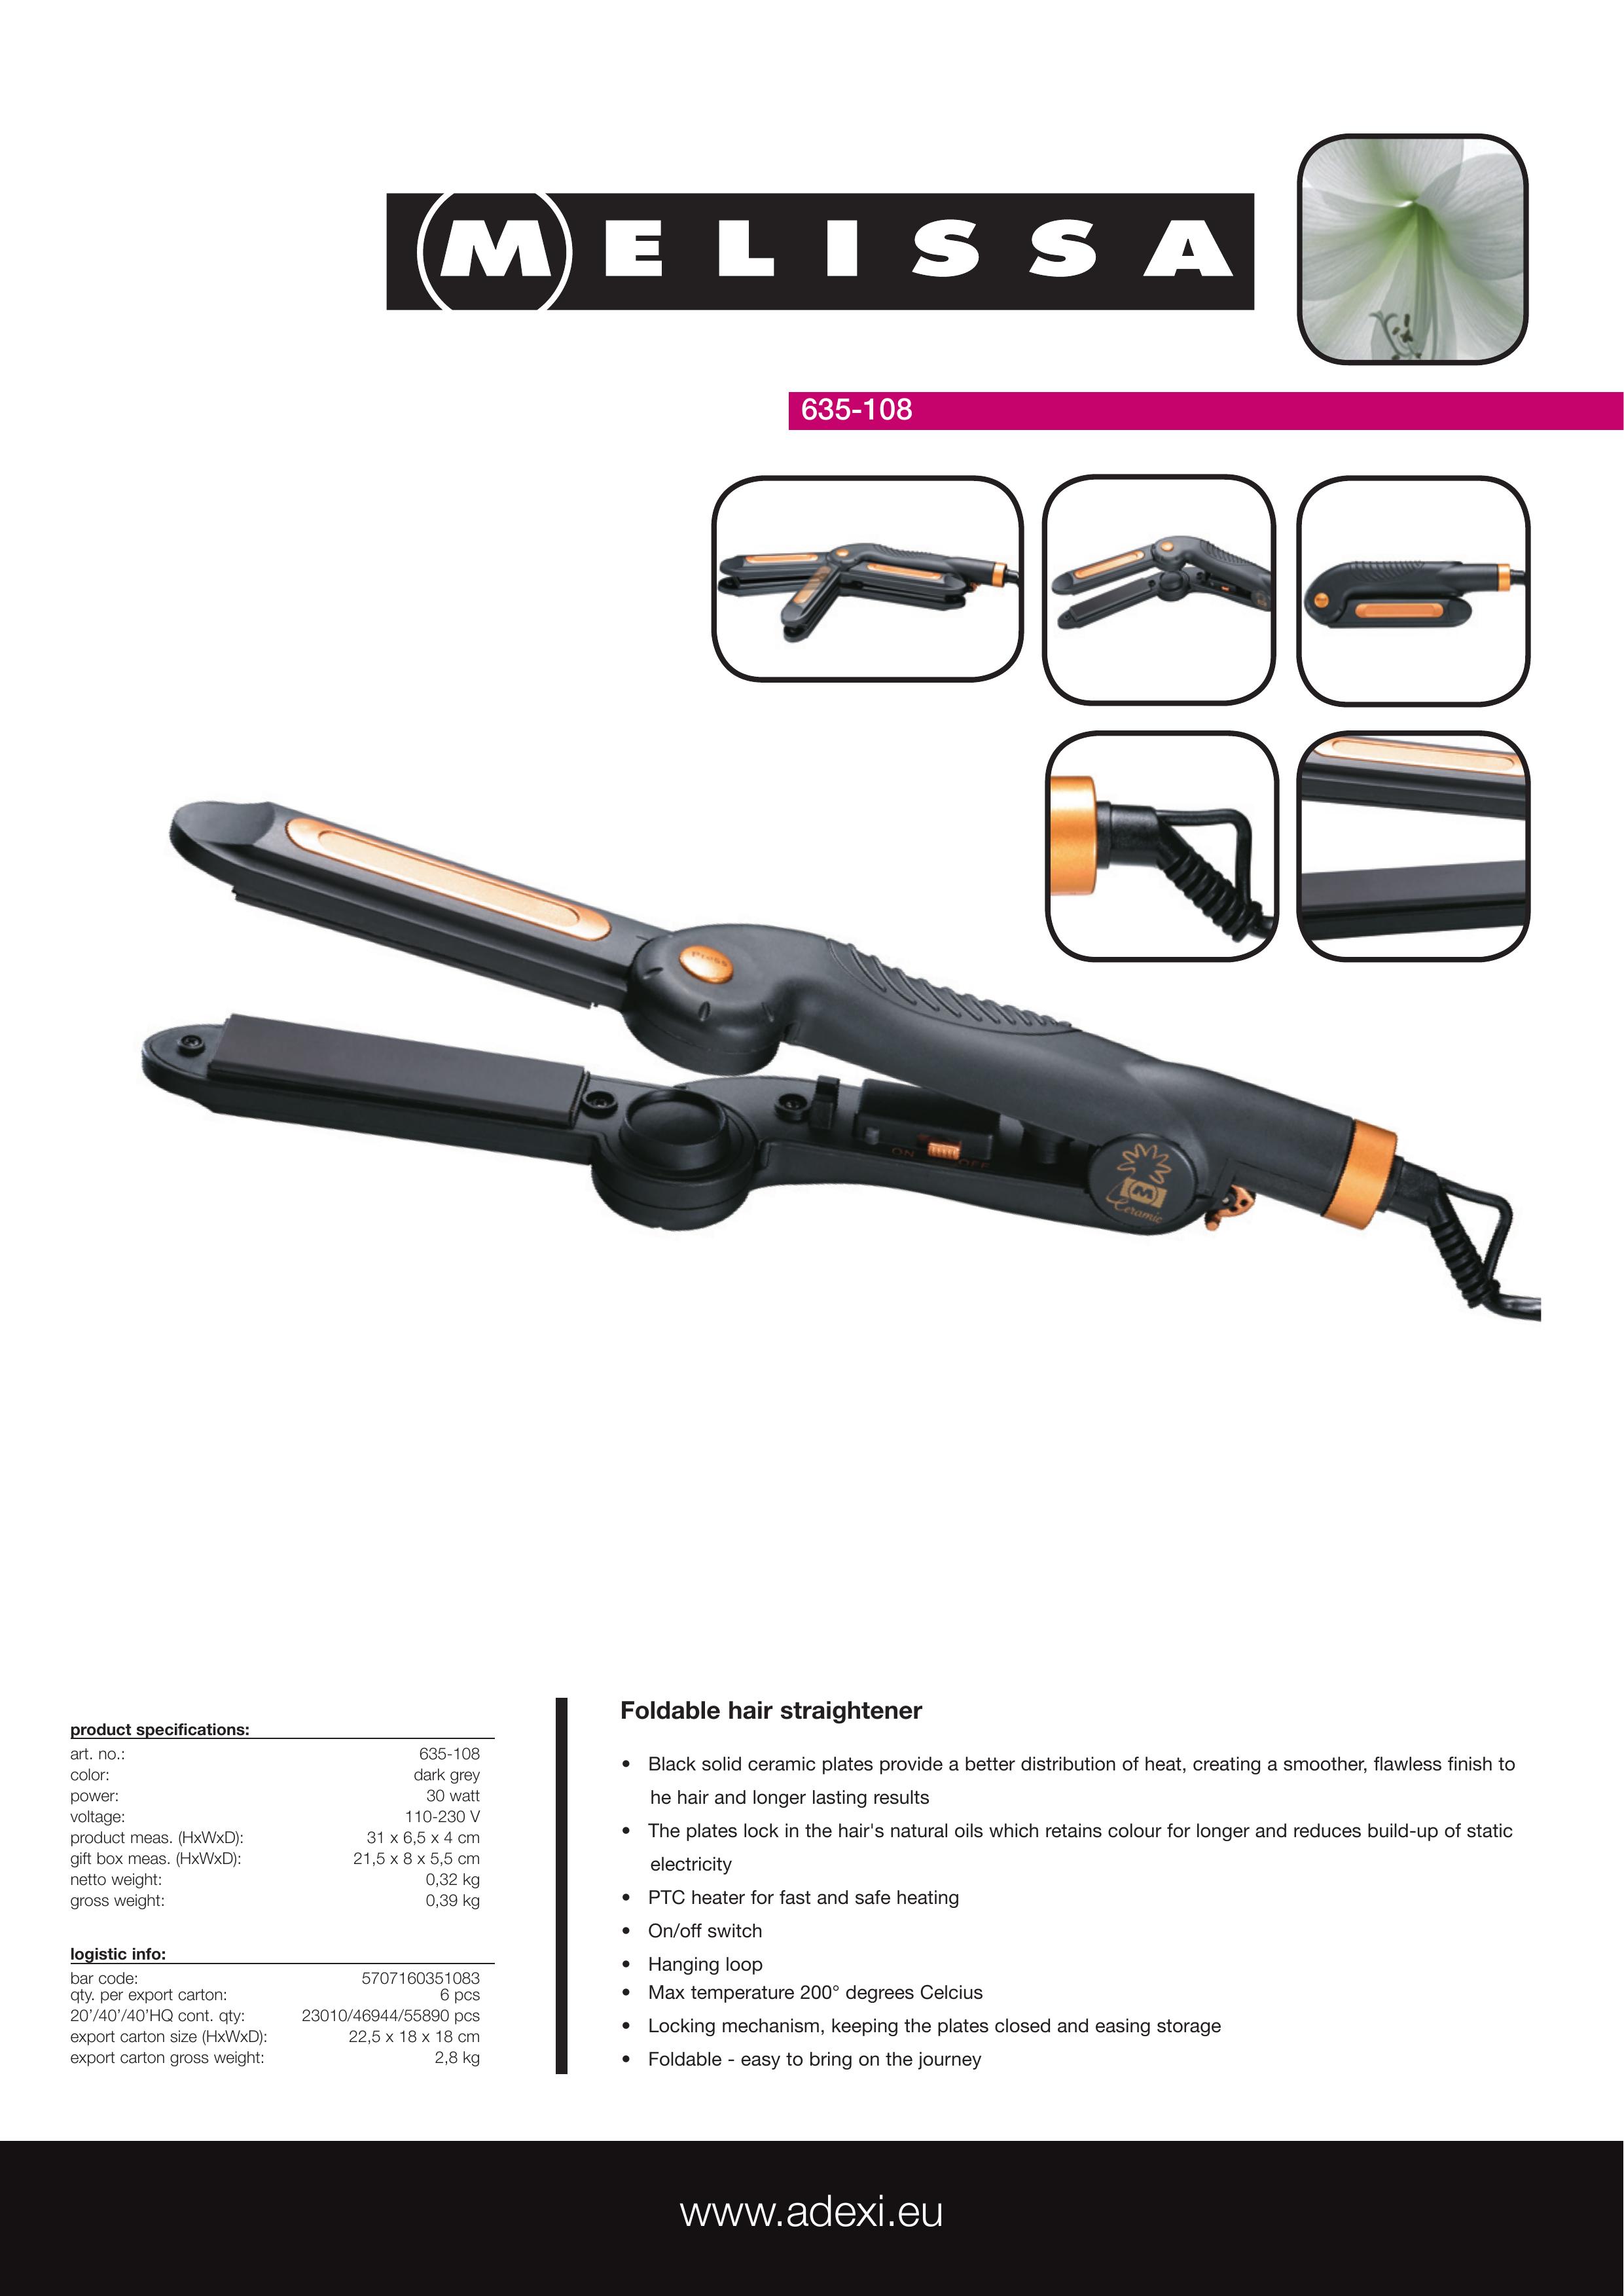 Melissa 635-108 Styling Iron User Manual